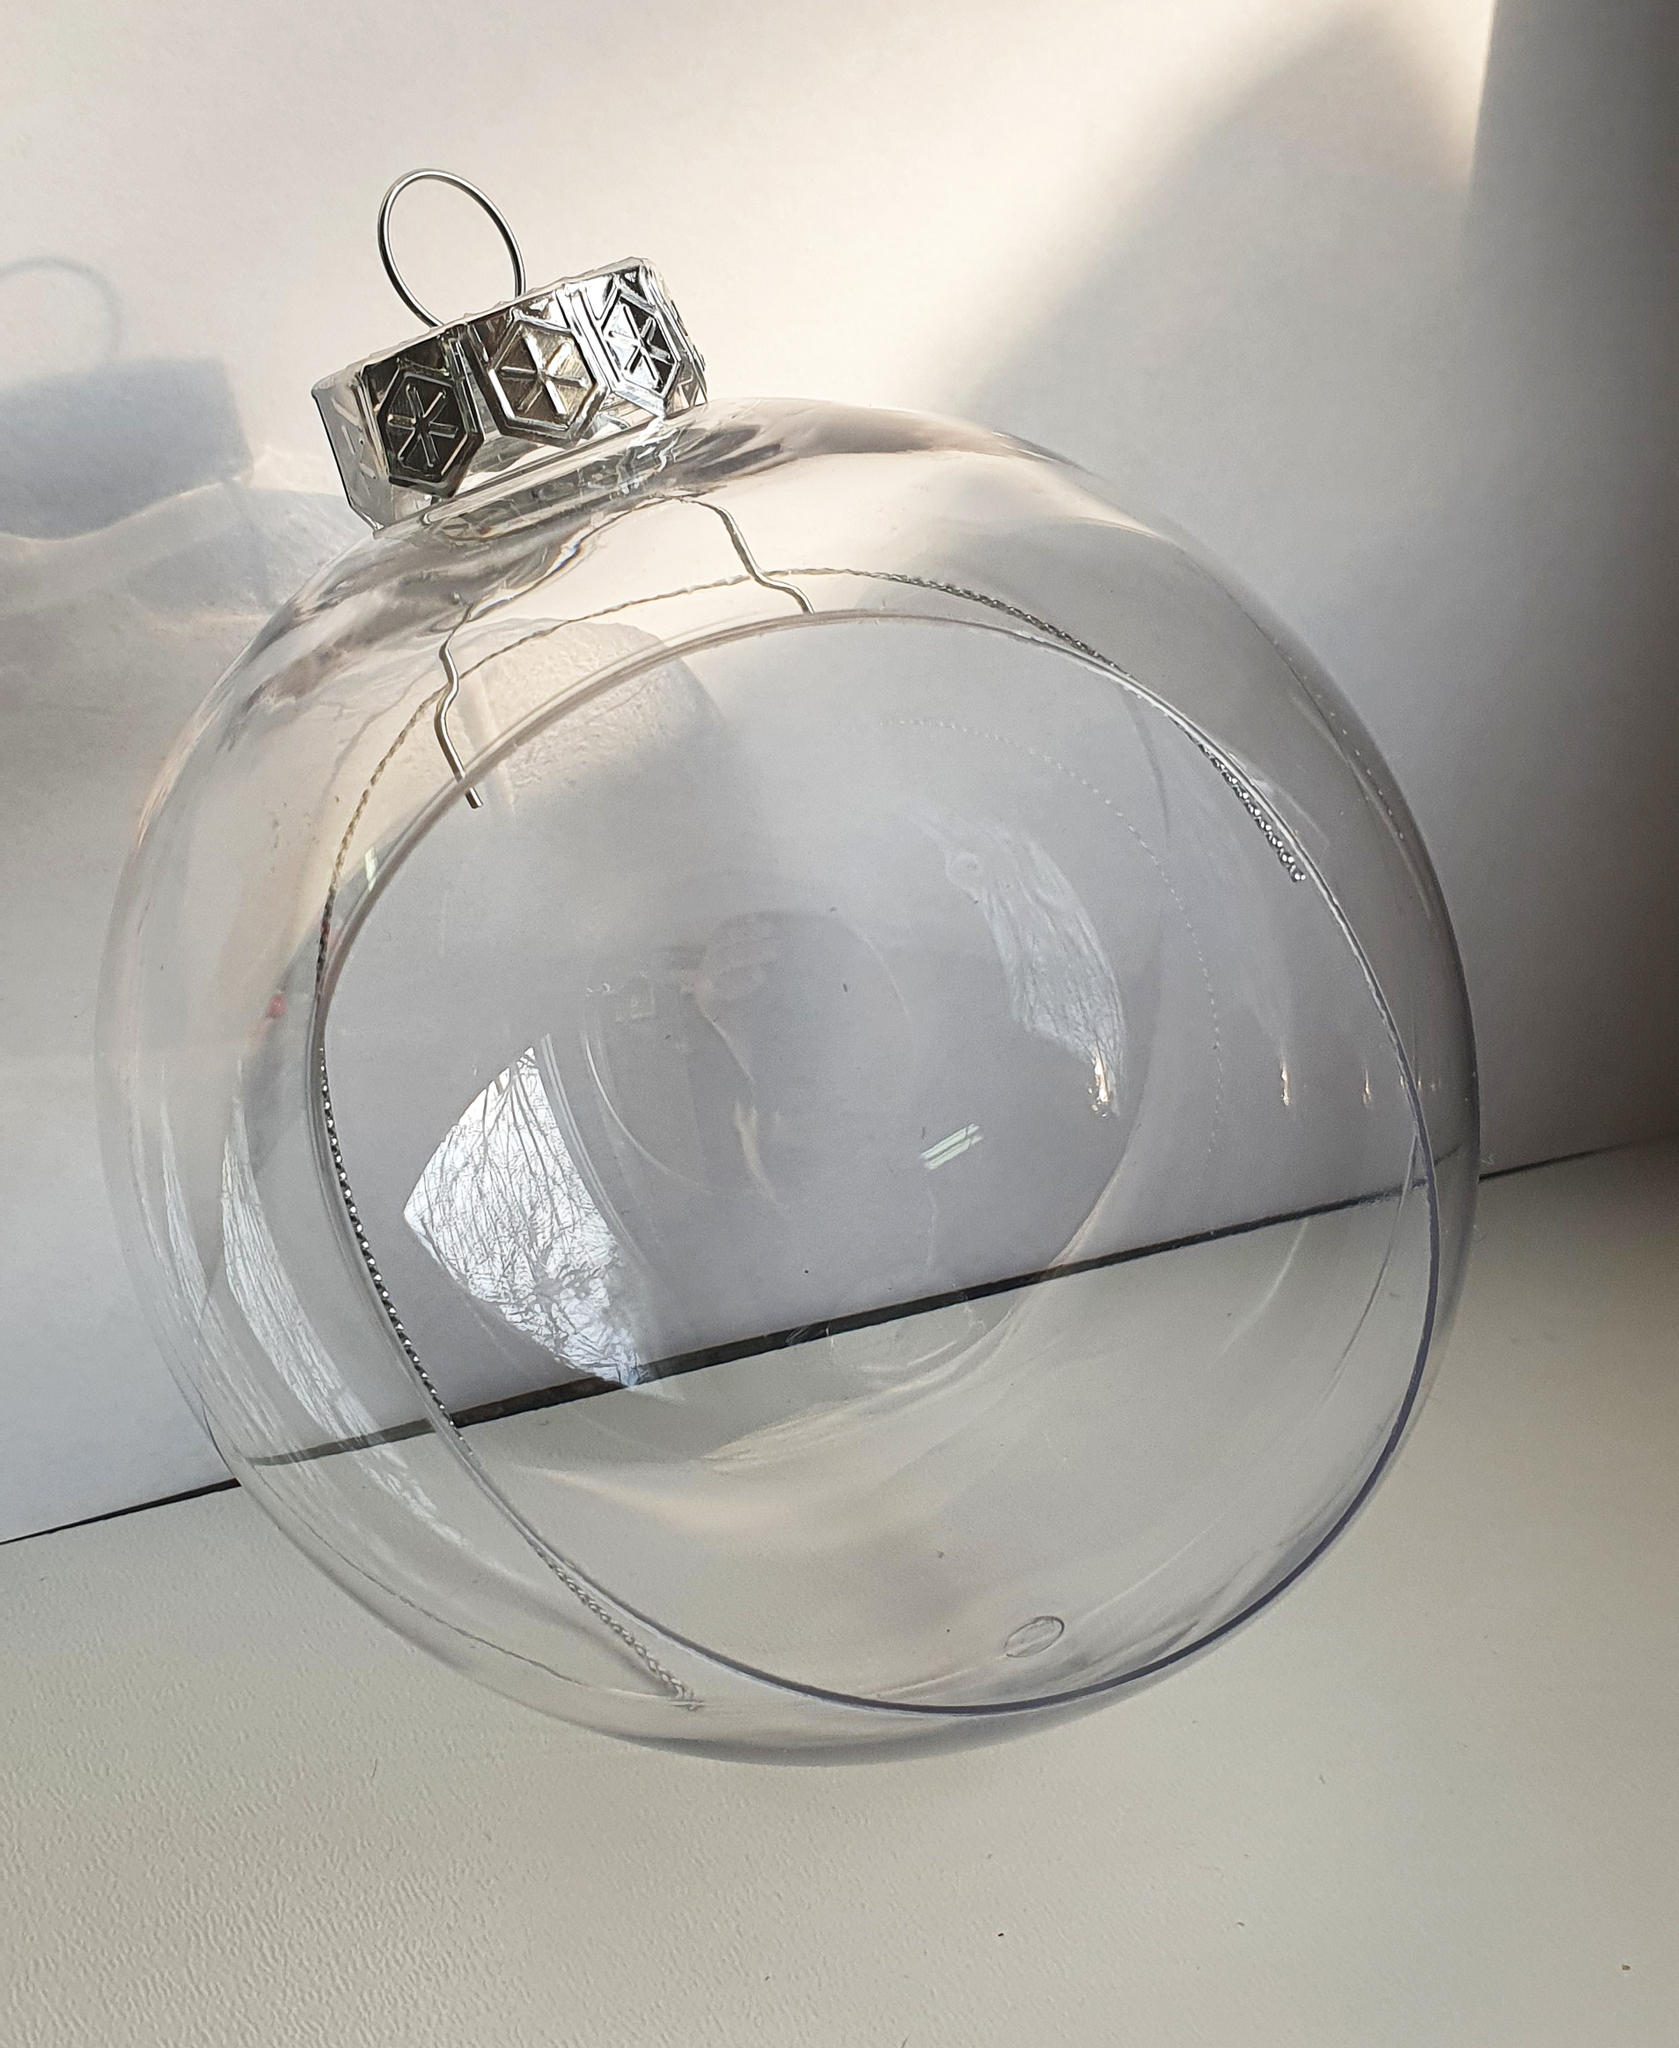 Шар пластиковый прозрачный. Шар прозрачный пластиковый. Прозрачные пластиковые шарики. Пластиковый прозрачный шар большой. Шар прозрачный пластиковый 20 см.